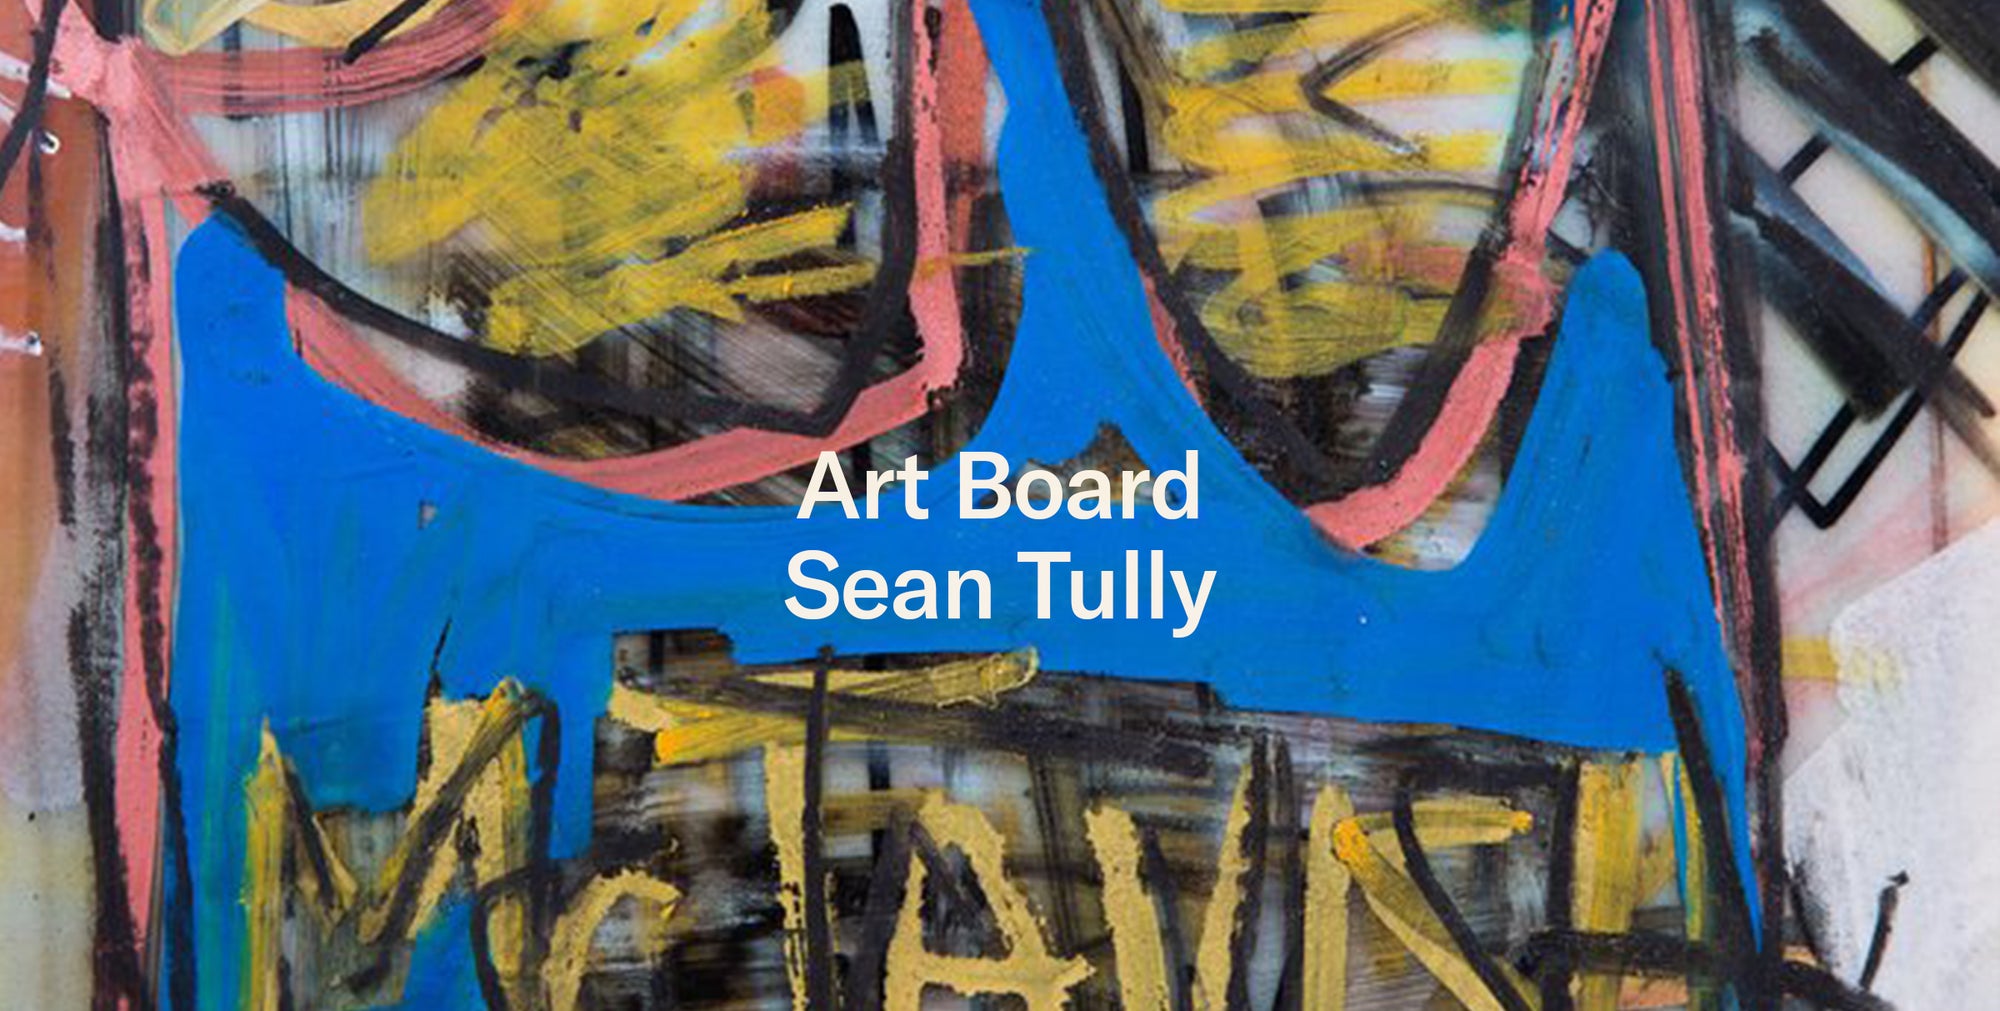 Sean Tully leaves his mark